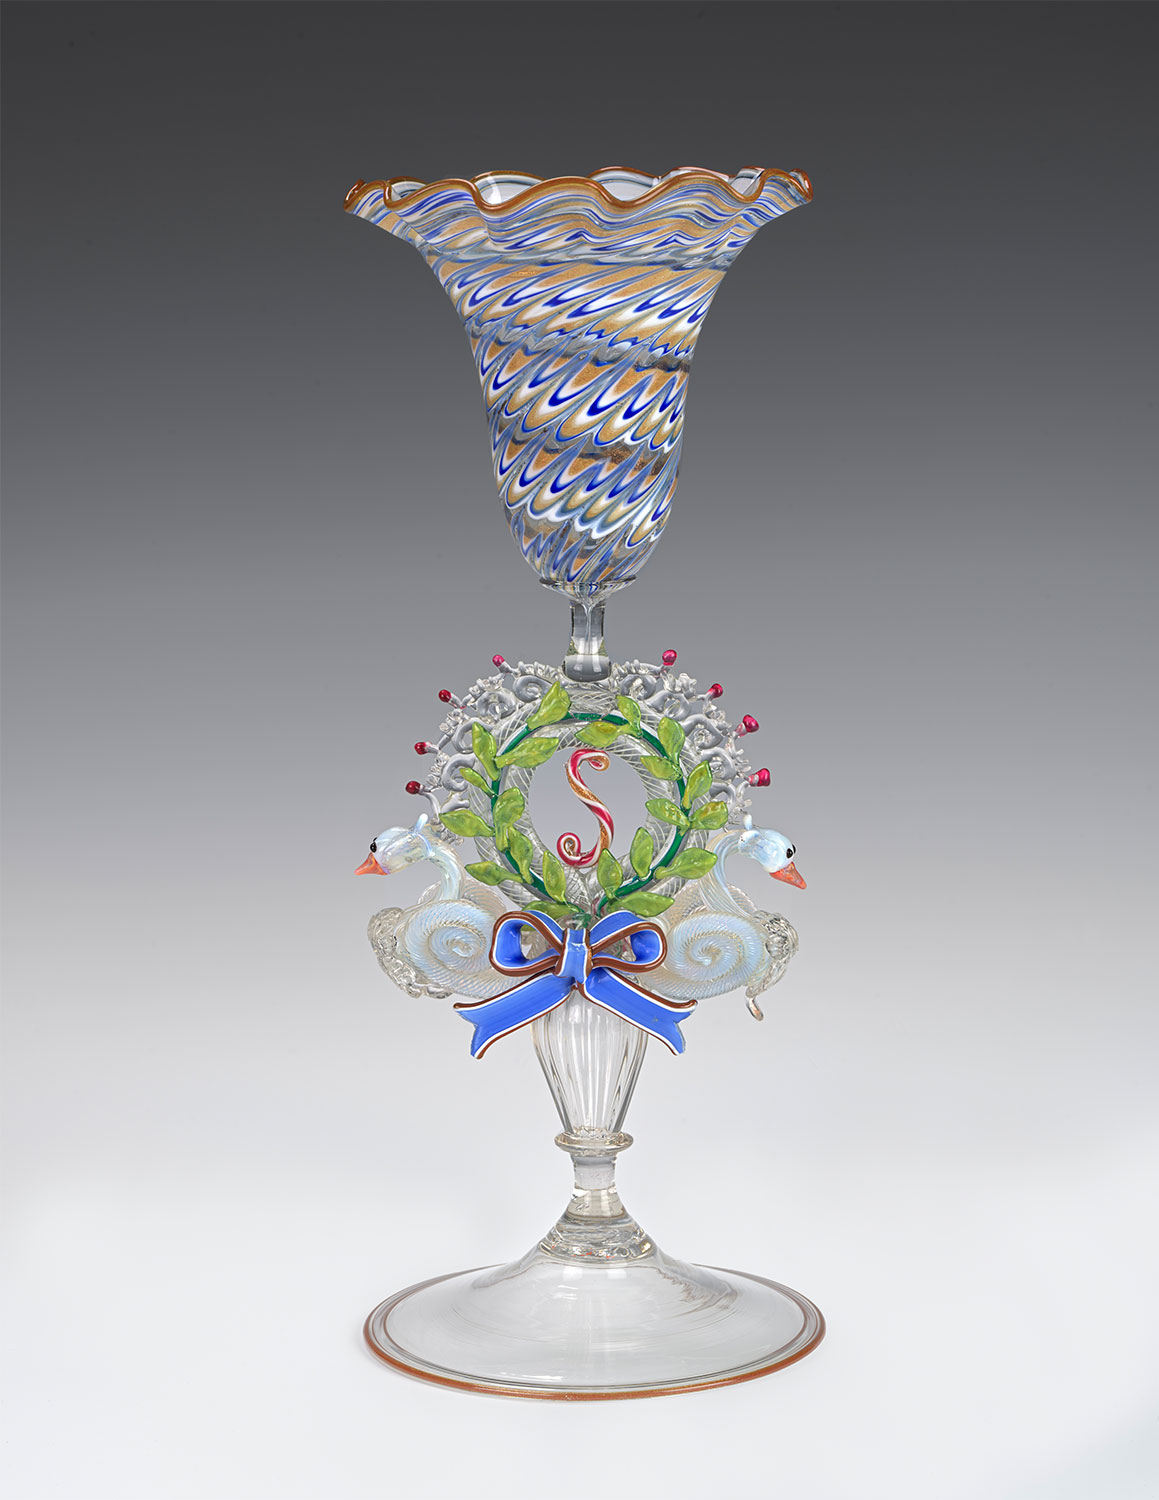 Dazzling Venetian Glass exhibition